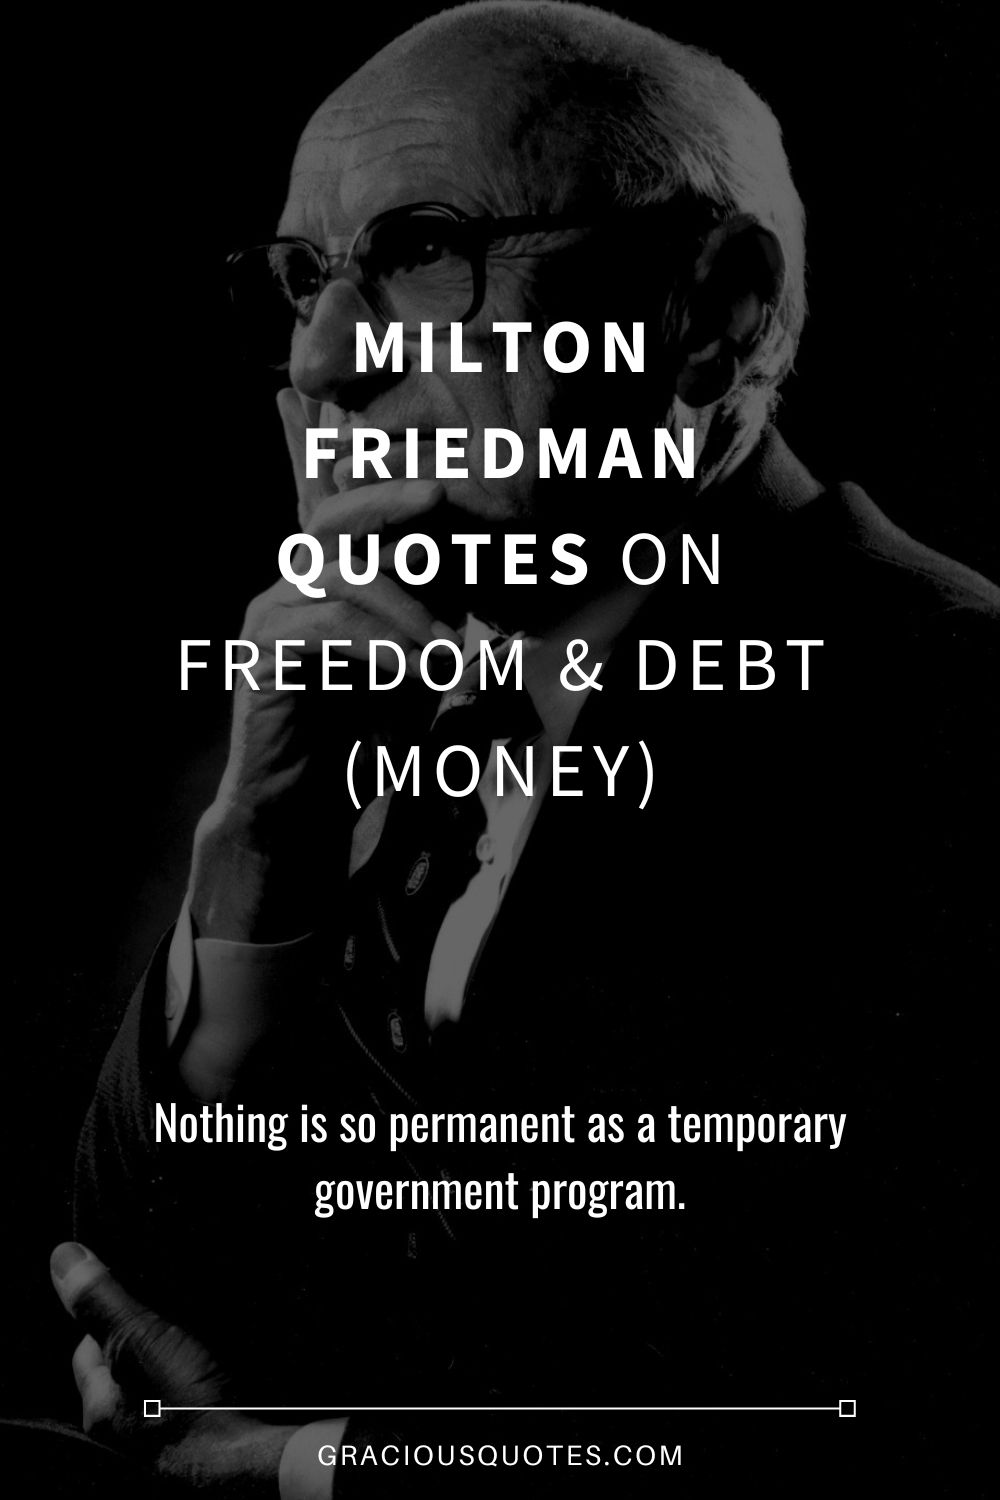 Milton Friedman Quotes on Freedom & Debt (MONEY) - Gracious Quotes